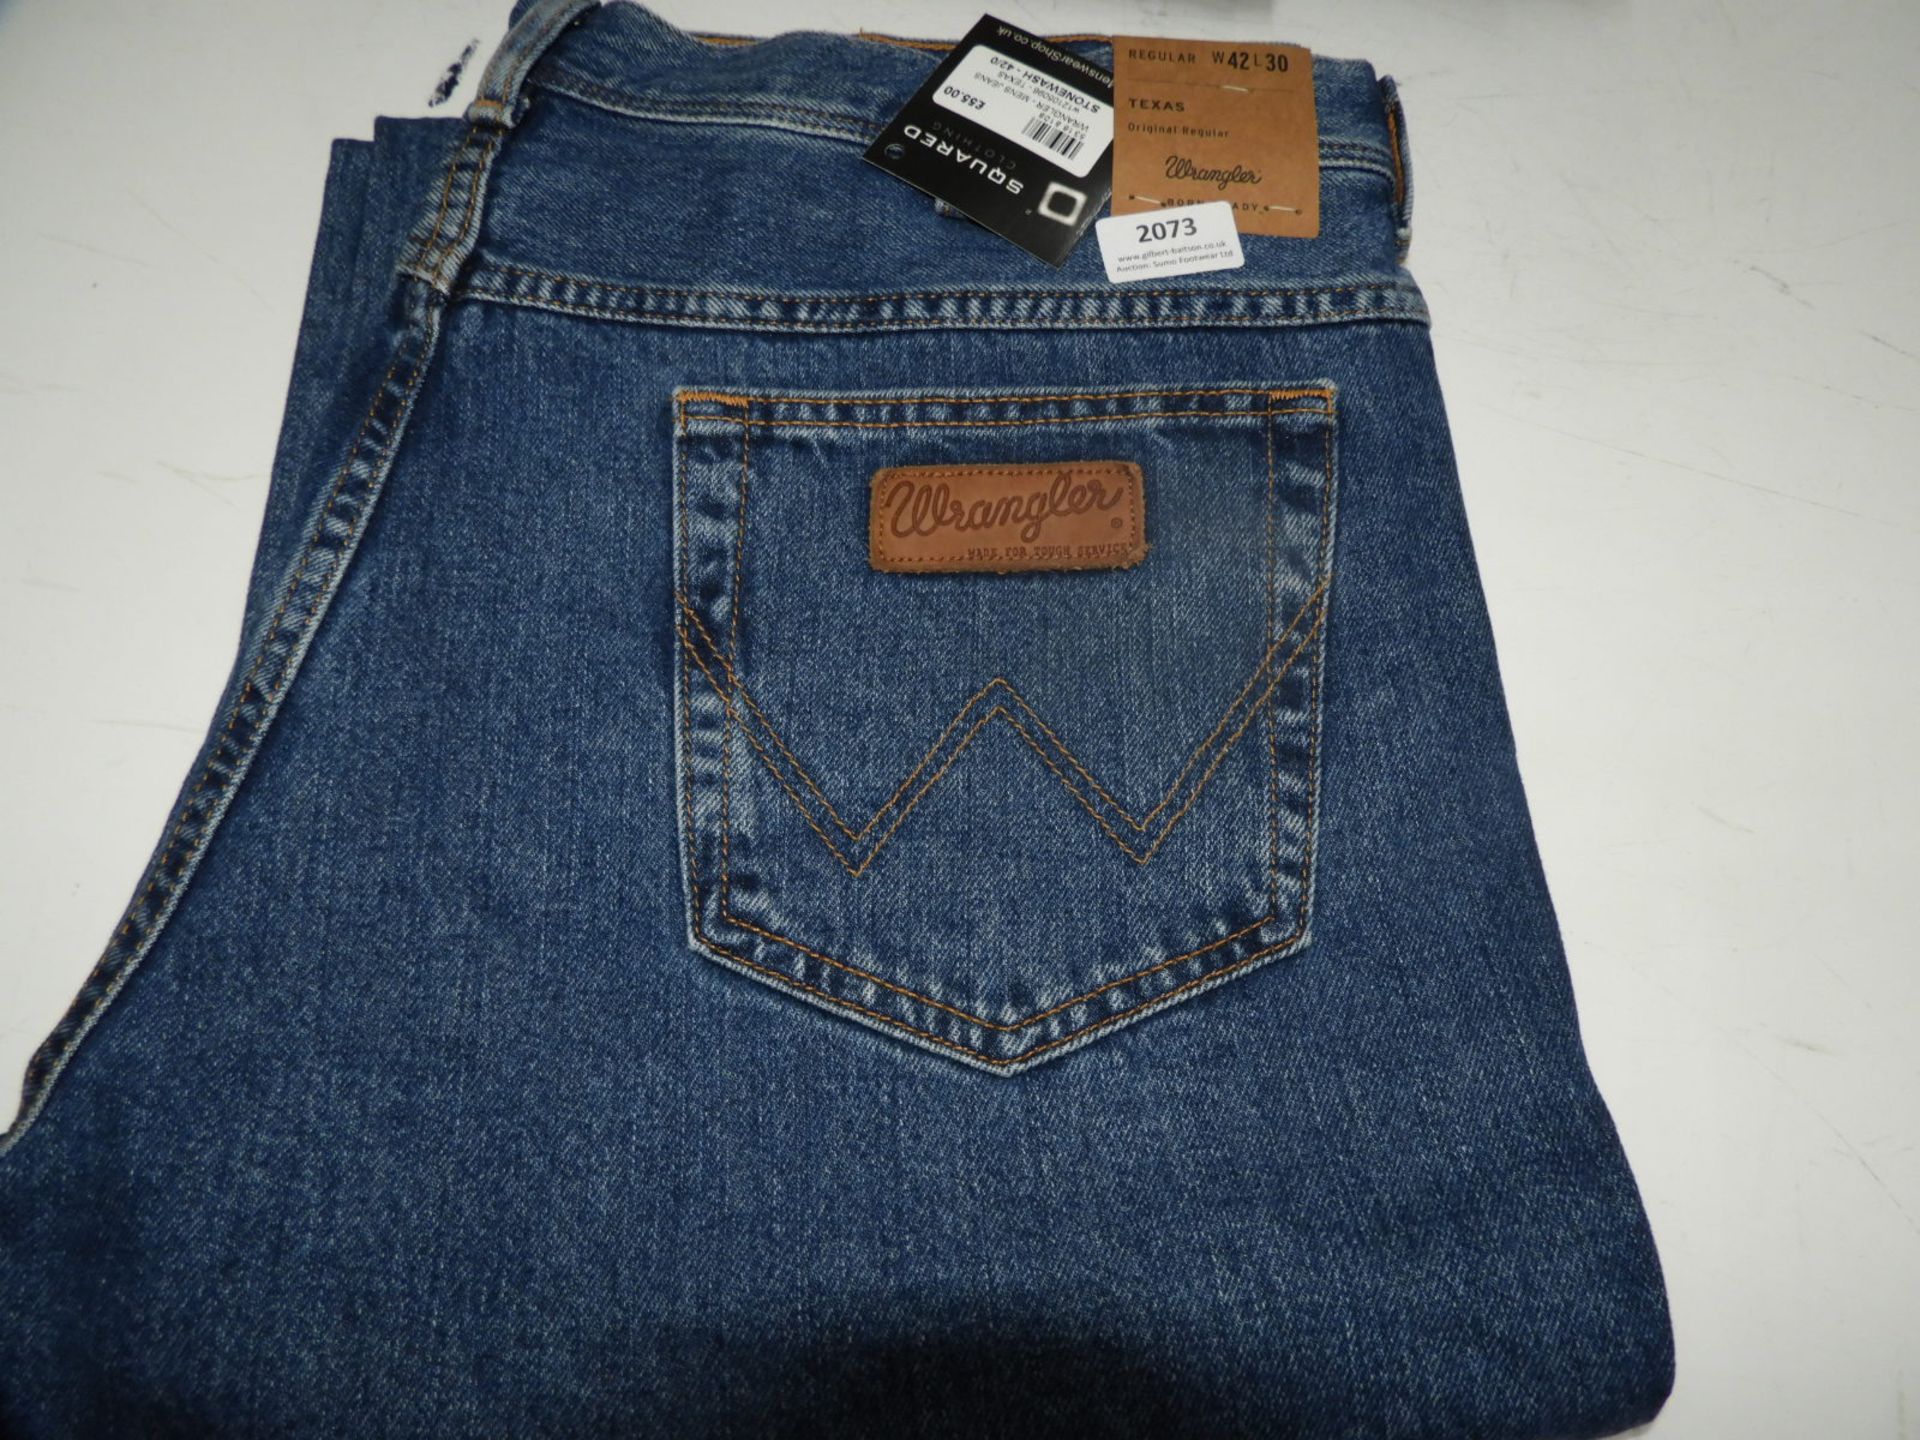 *Wrangler Texas Original Straight Denim Jeans Size